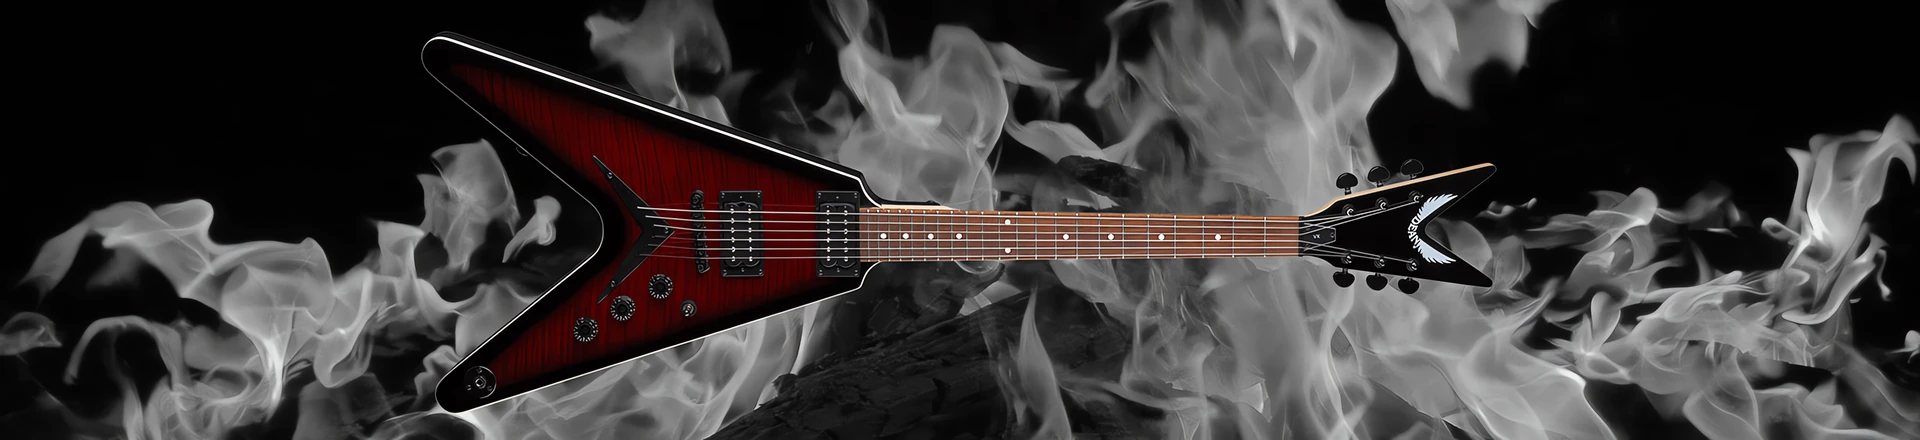 VX Flame Top  - Rasowa V-ka ze stajni Dean Guitars 